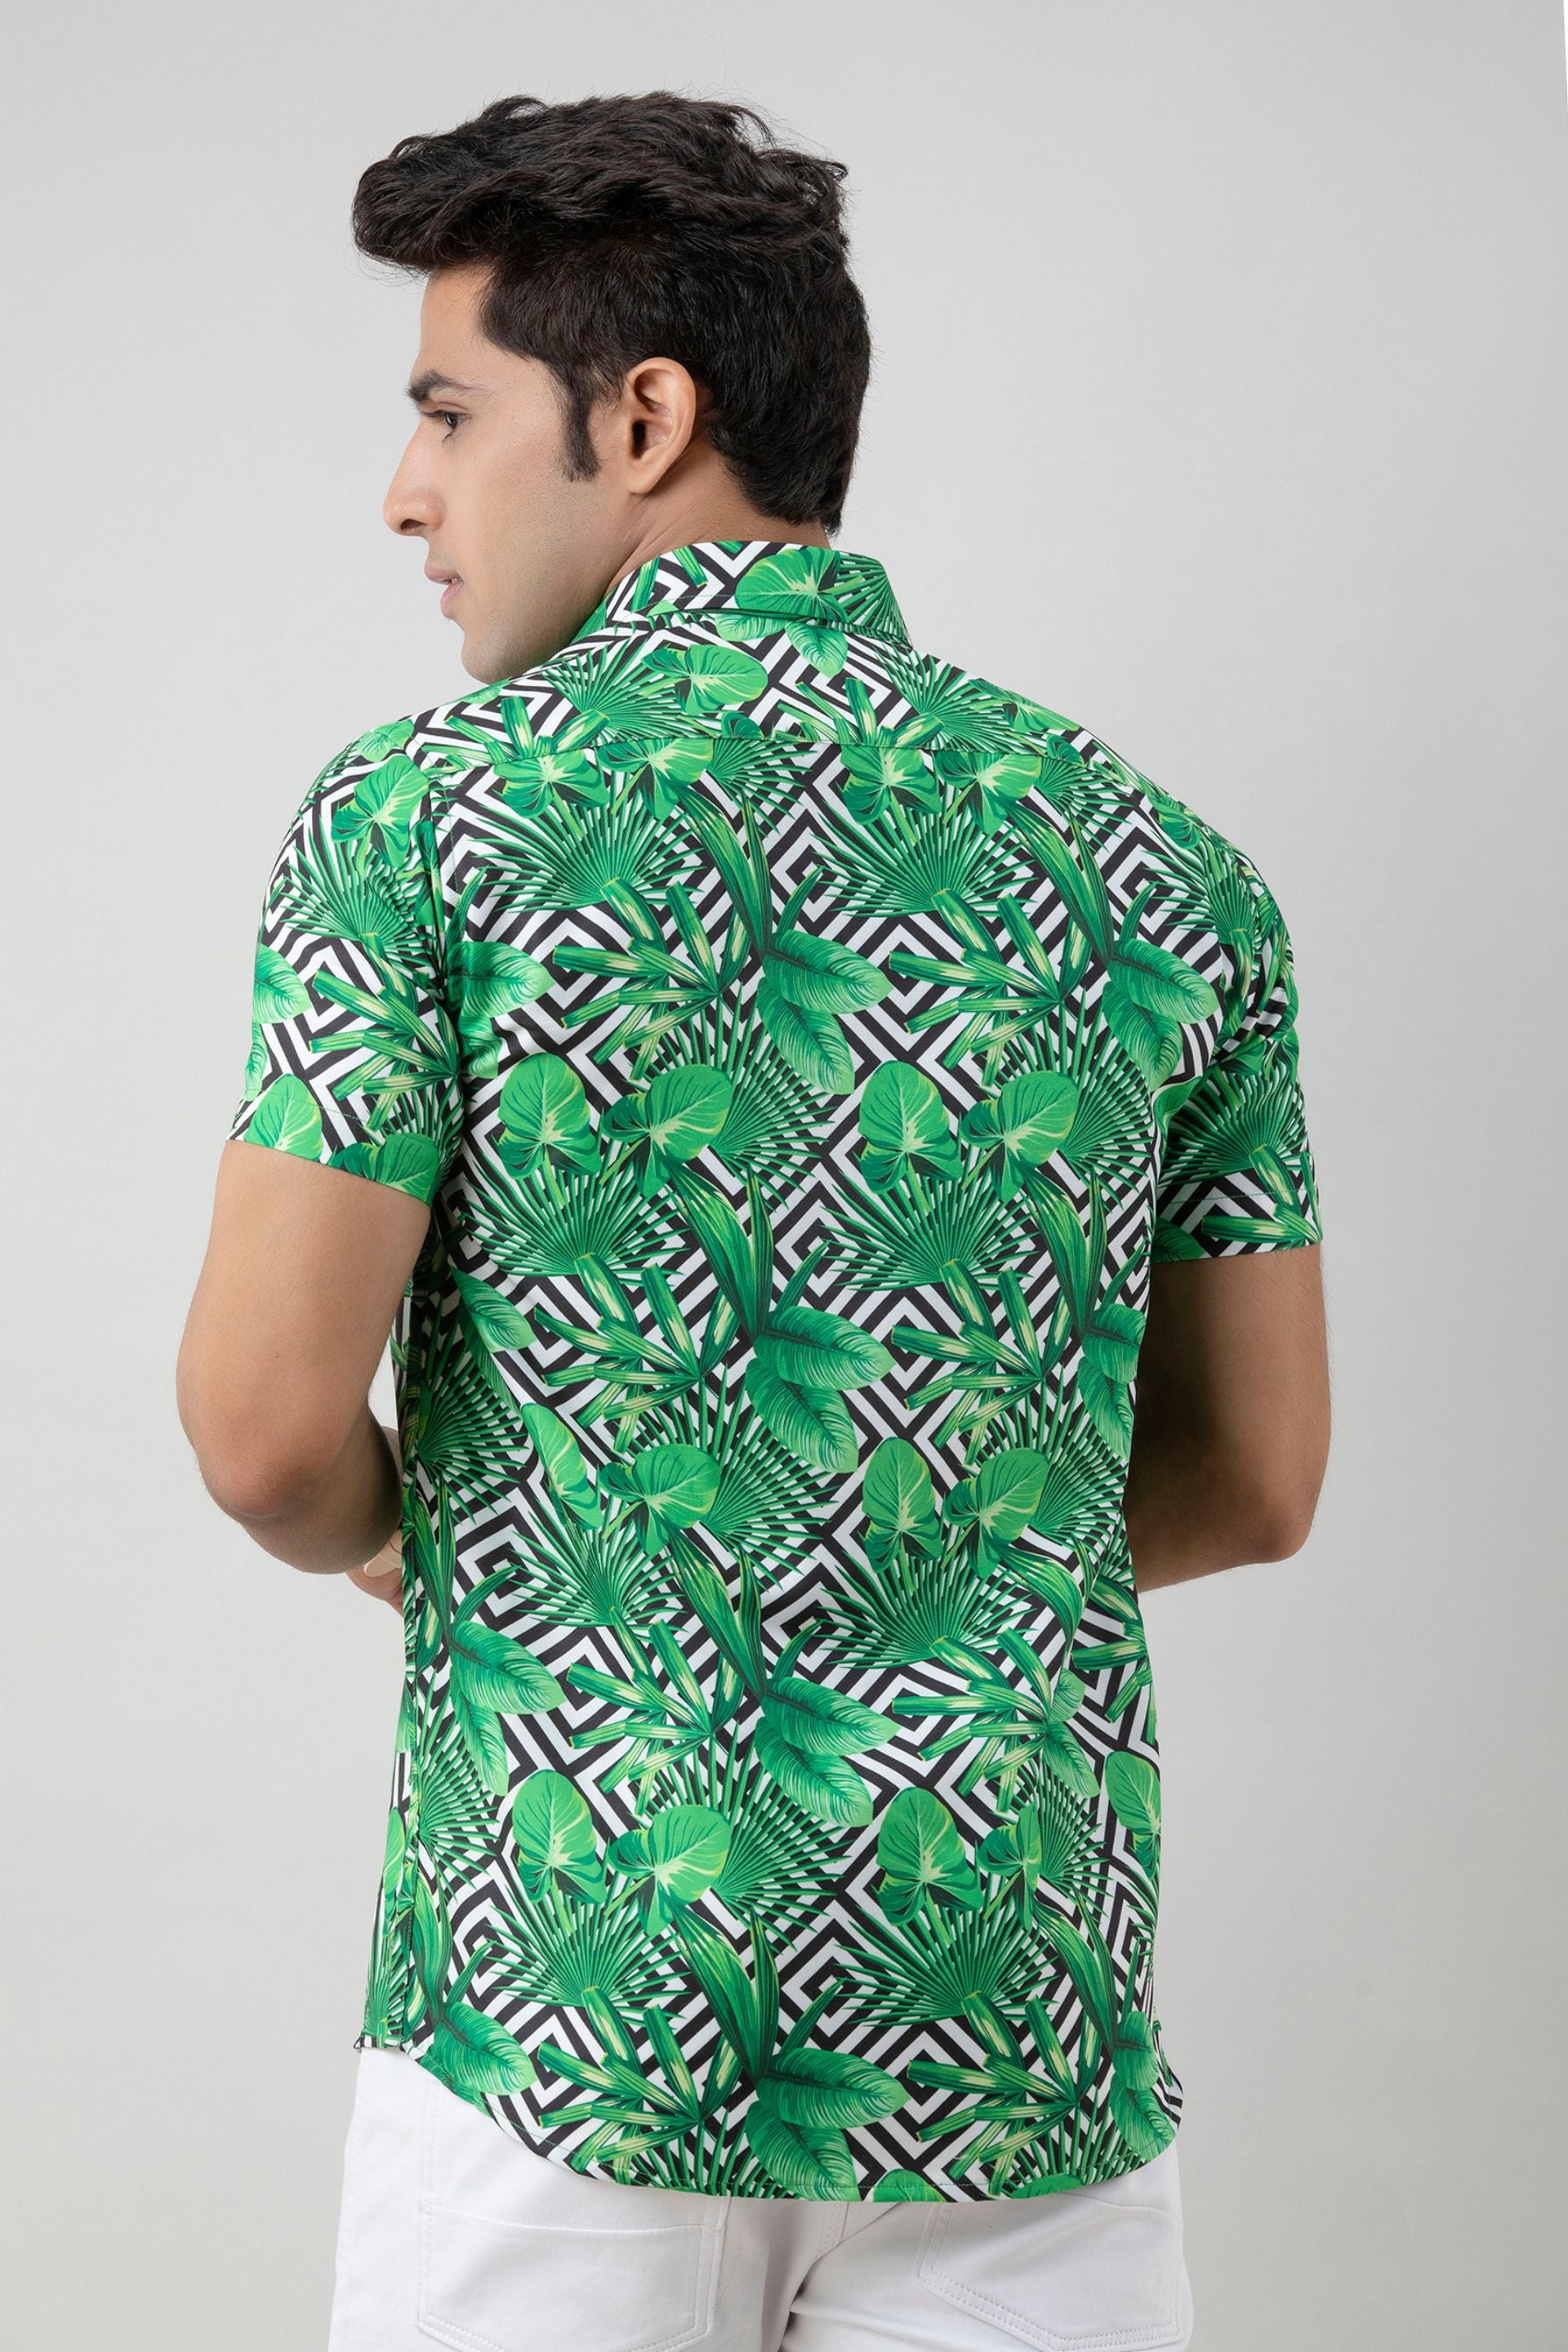 Firangi Yarn Zelena Green With Checkers Printed Shirt